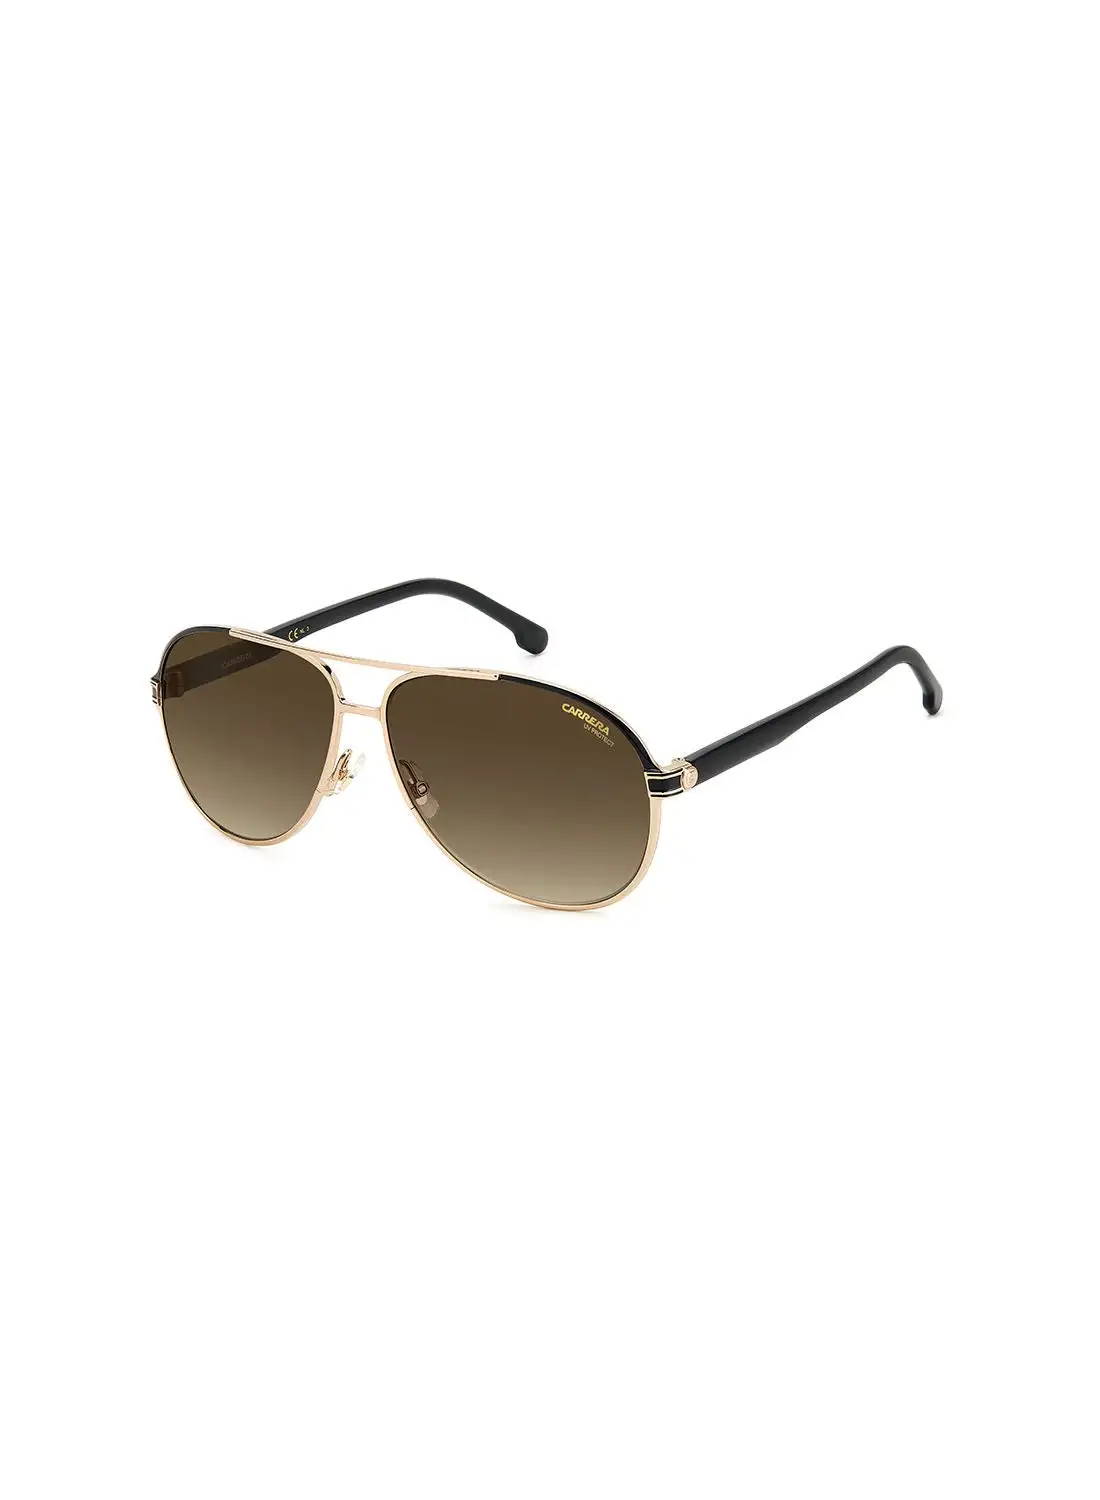 Carrera Unisex UV Protection Pilot Sunglasses - Carrera 1051/S Gold/Black 61 - Lens Size: 61 Mm